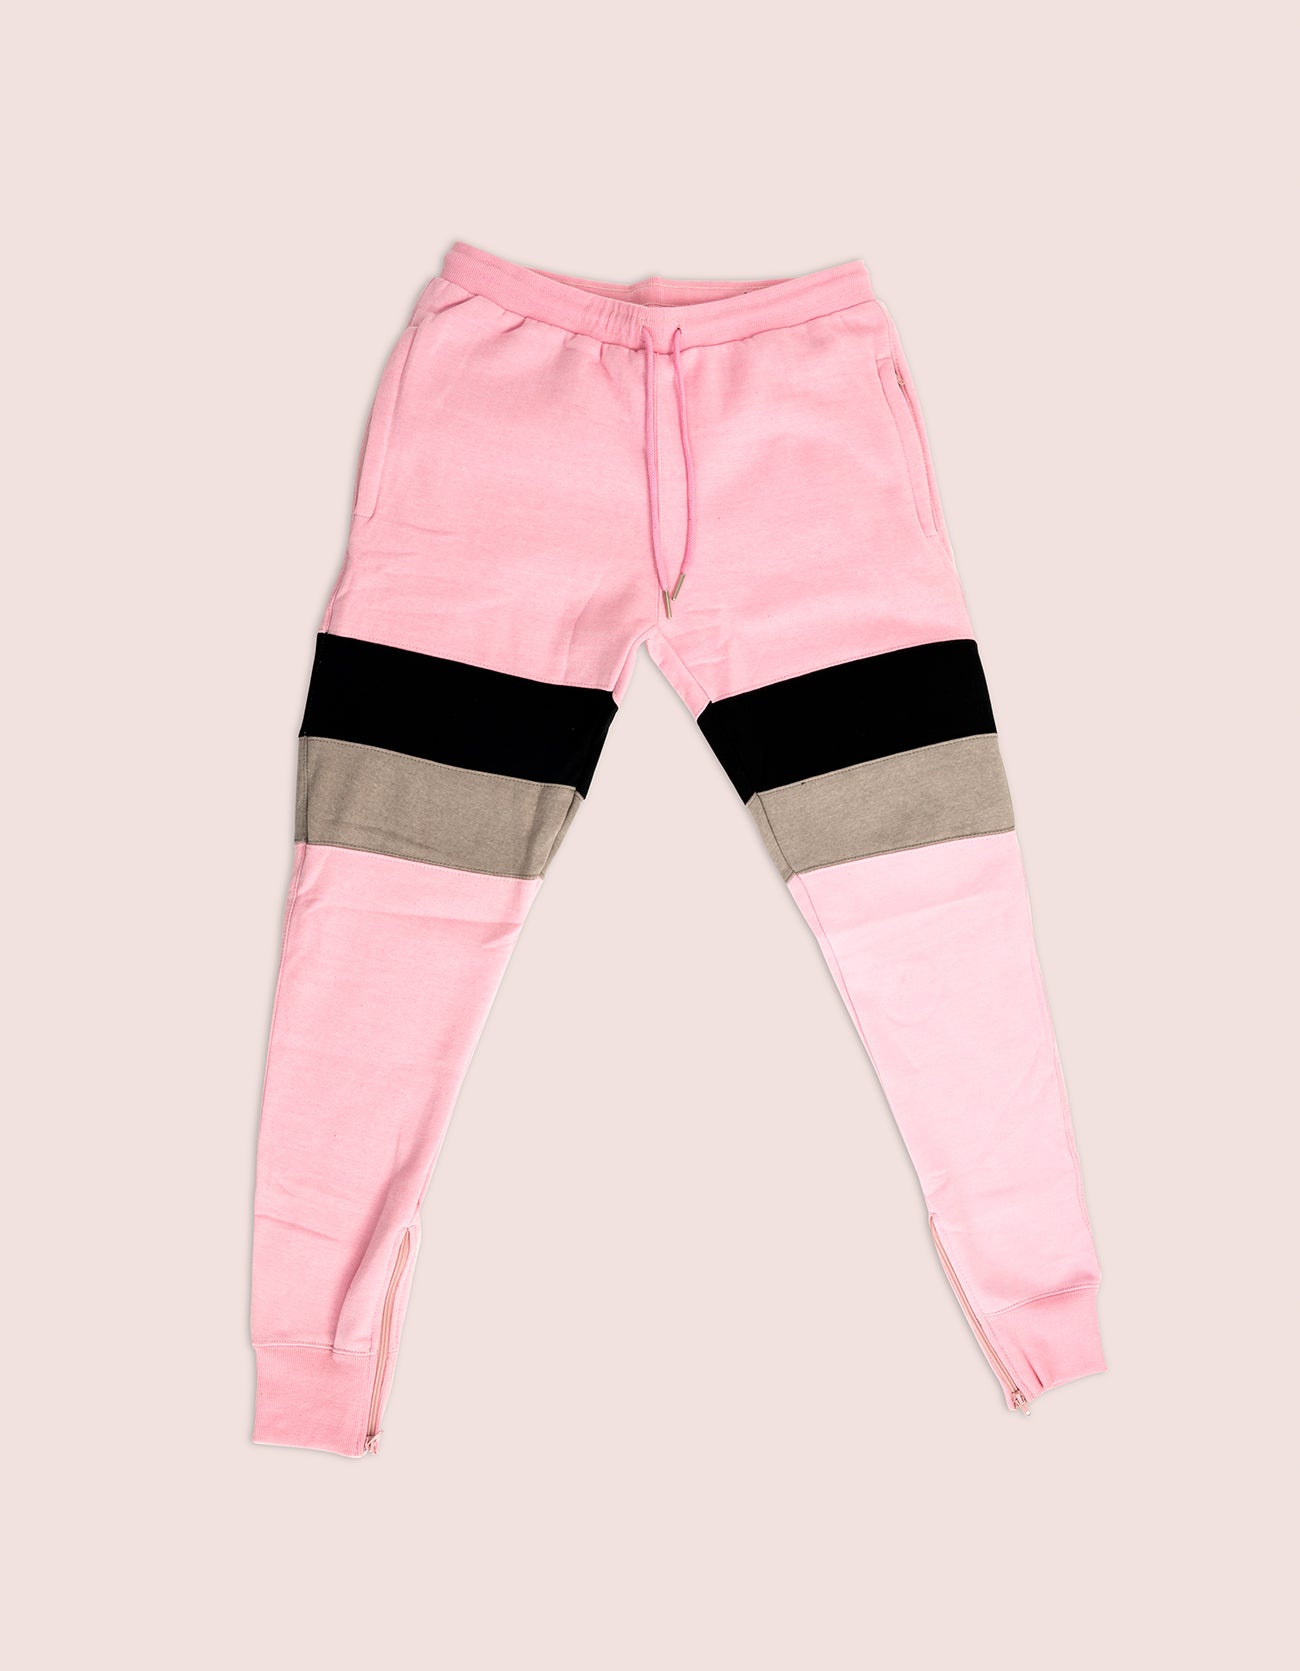 Dipset Couture Pink/Grey/Black Sweatsuit